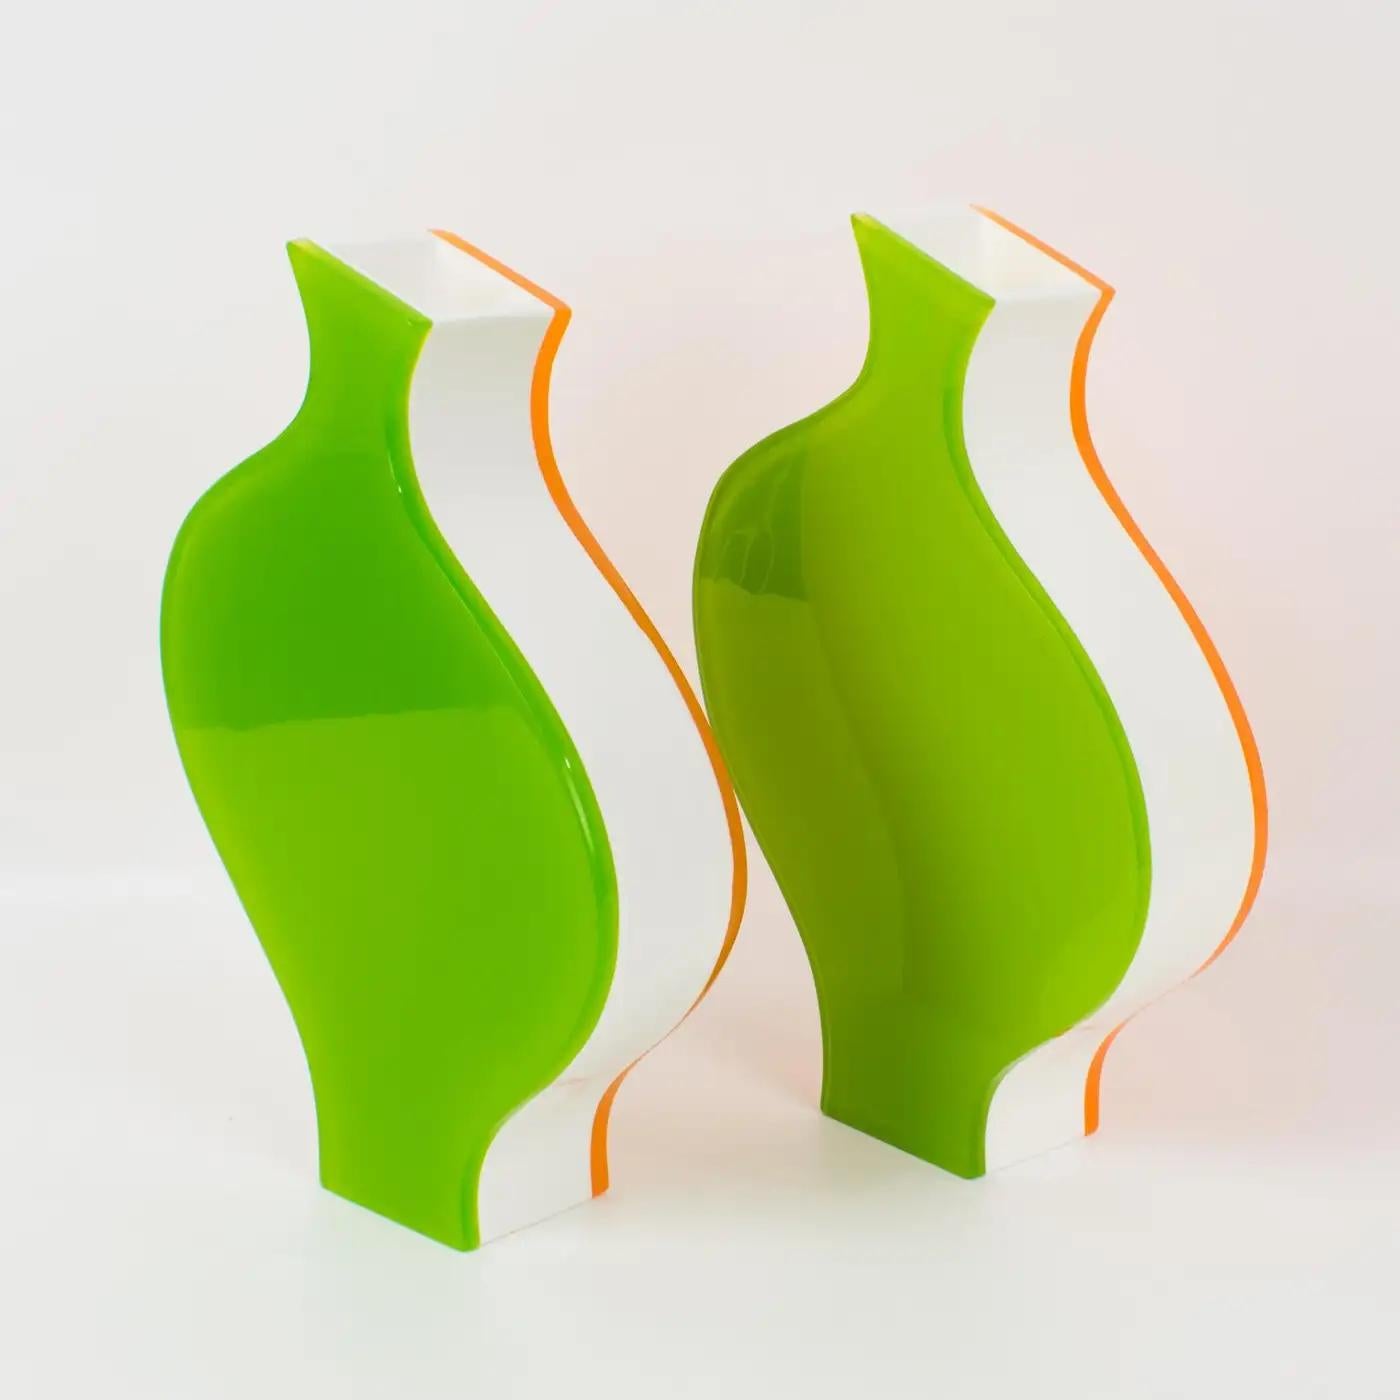 Modern Villeroy & Boch Orange and Green Lucite Vases, 1990s For Sale